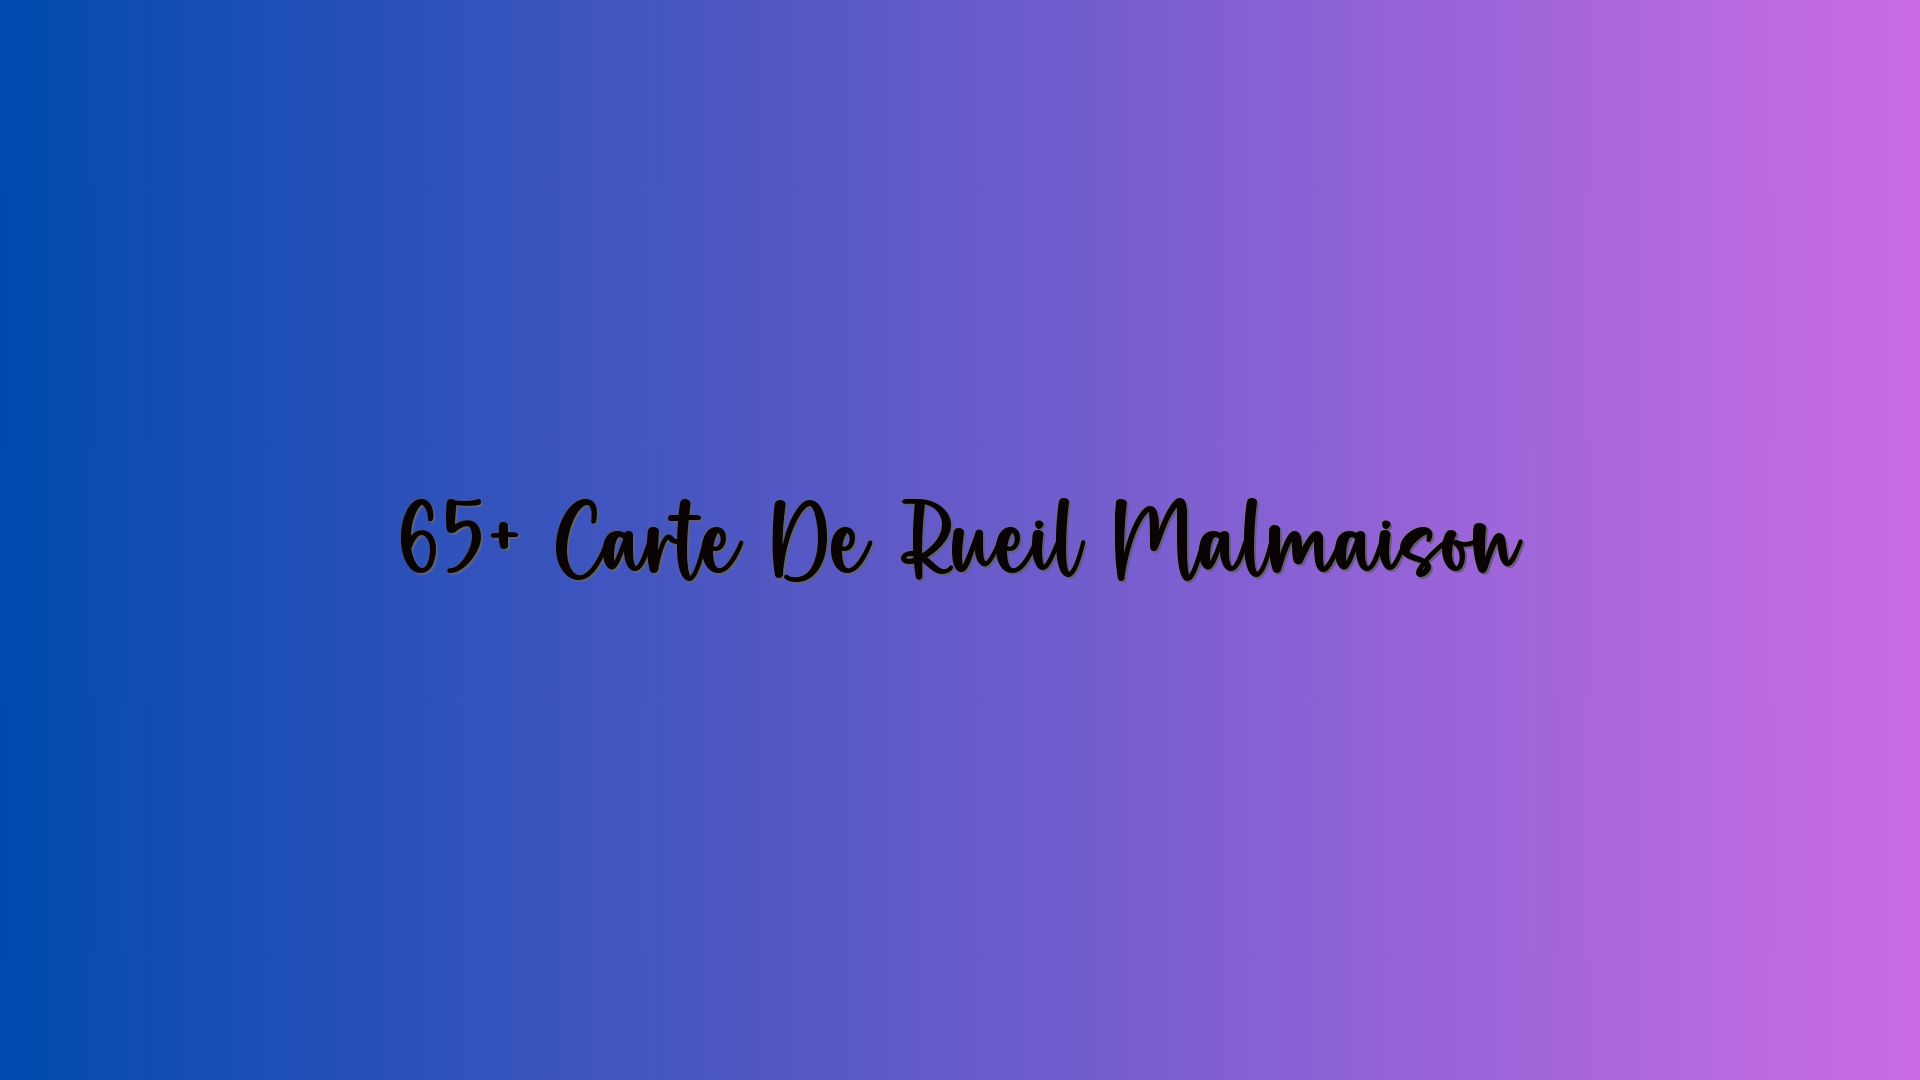 65+ Carte De Rueil Malmaison